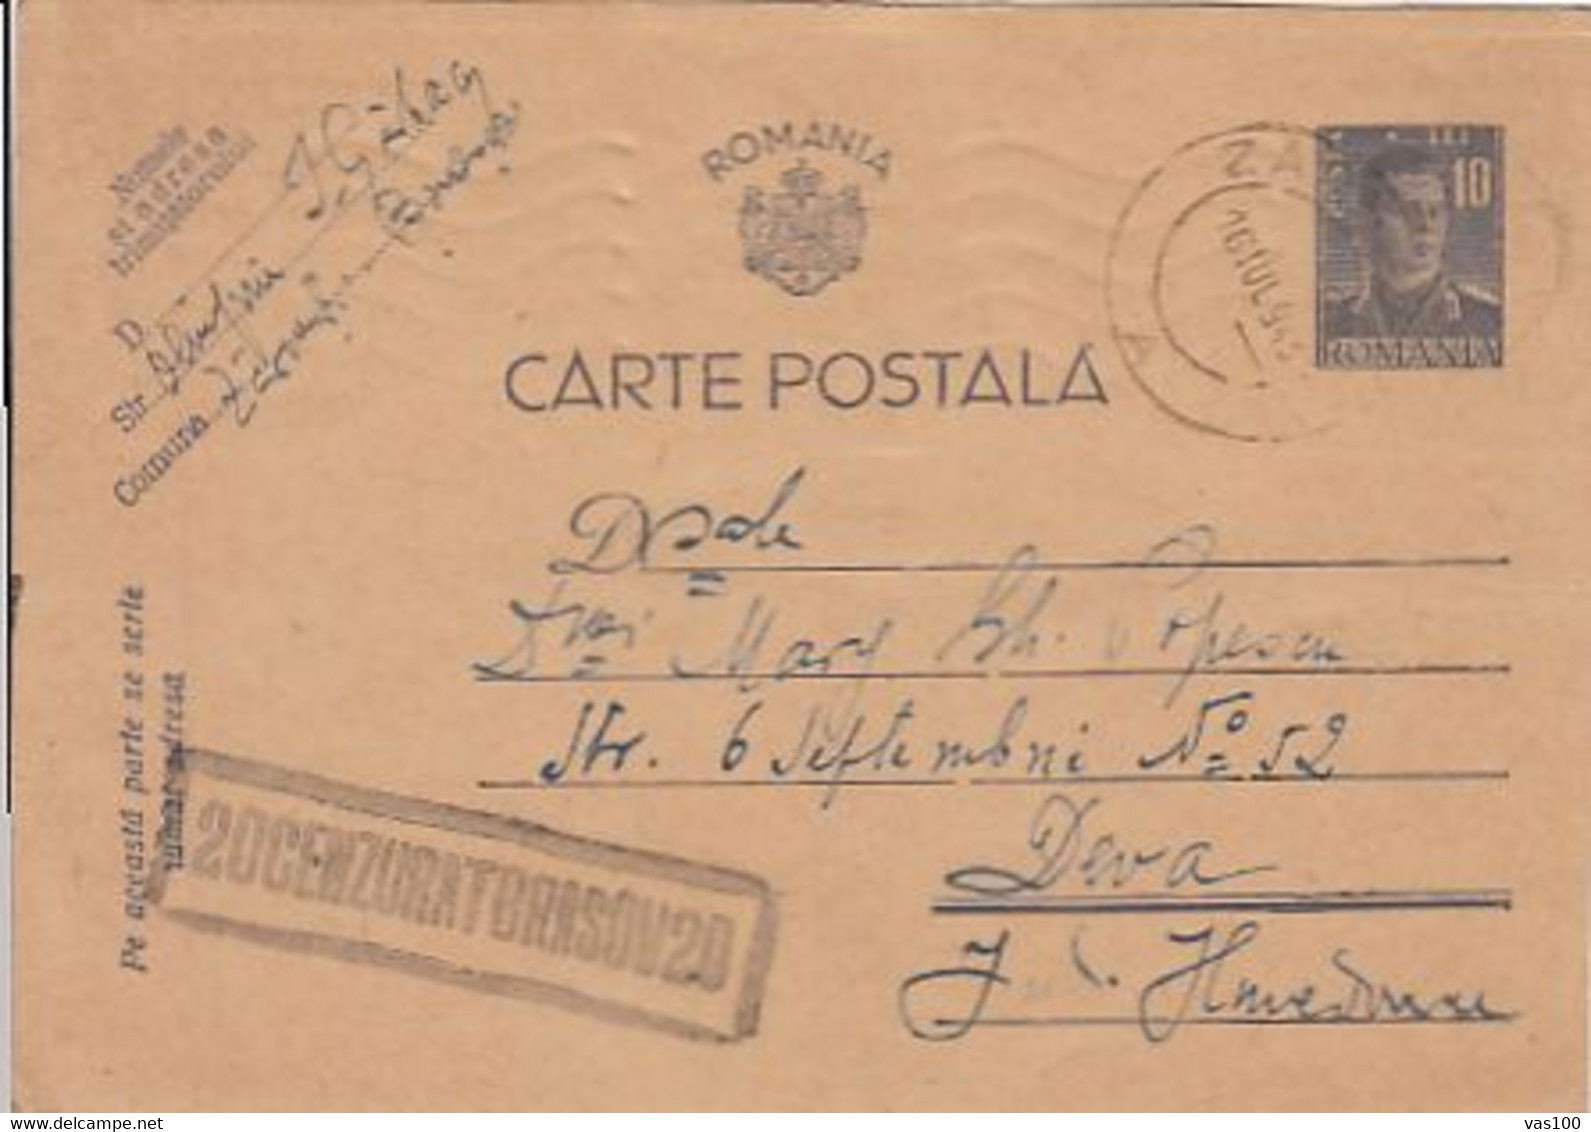 WW2 LETTERS, CENSORED BRASOV NR 20, KING MICHAEL PC STATIONERY, ENTIER POSTAL, 1943, ROMANIA - 2. Weltkrieg (Briefe)